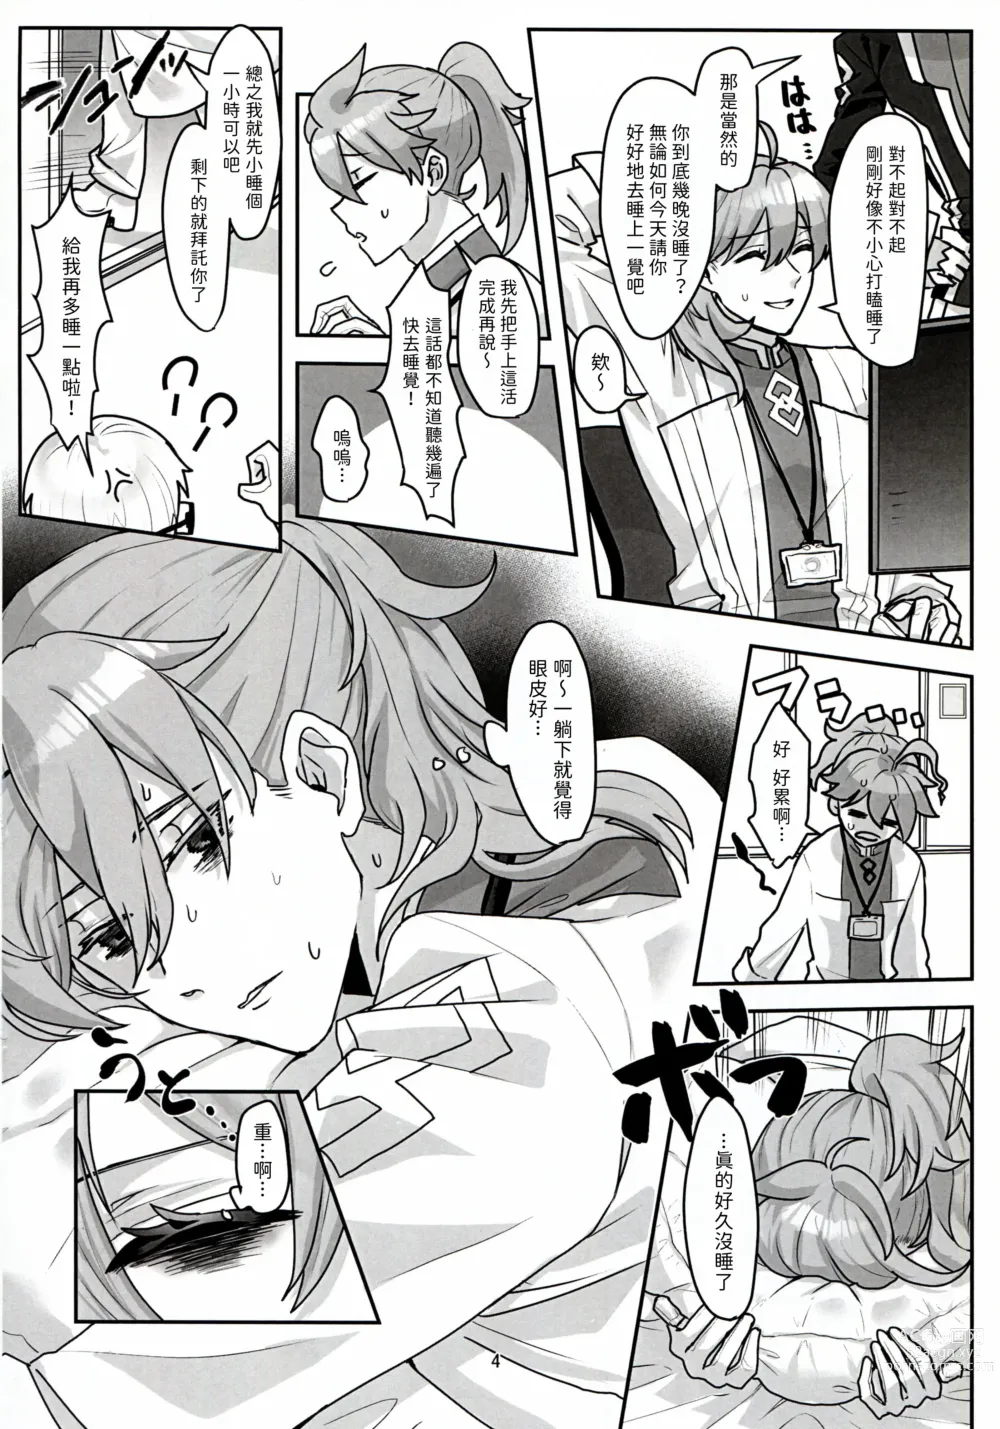 Page 4 of doujinshi 君だけのロマンチスト